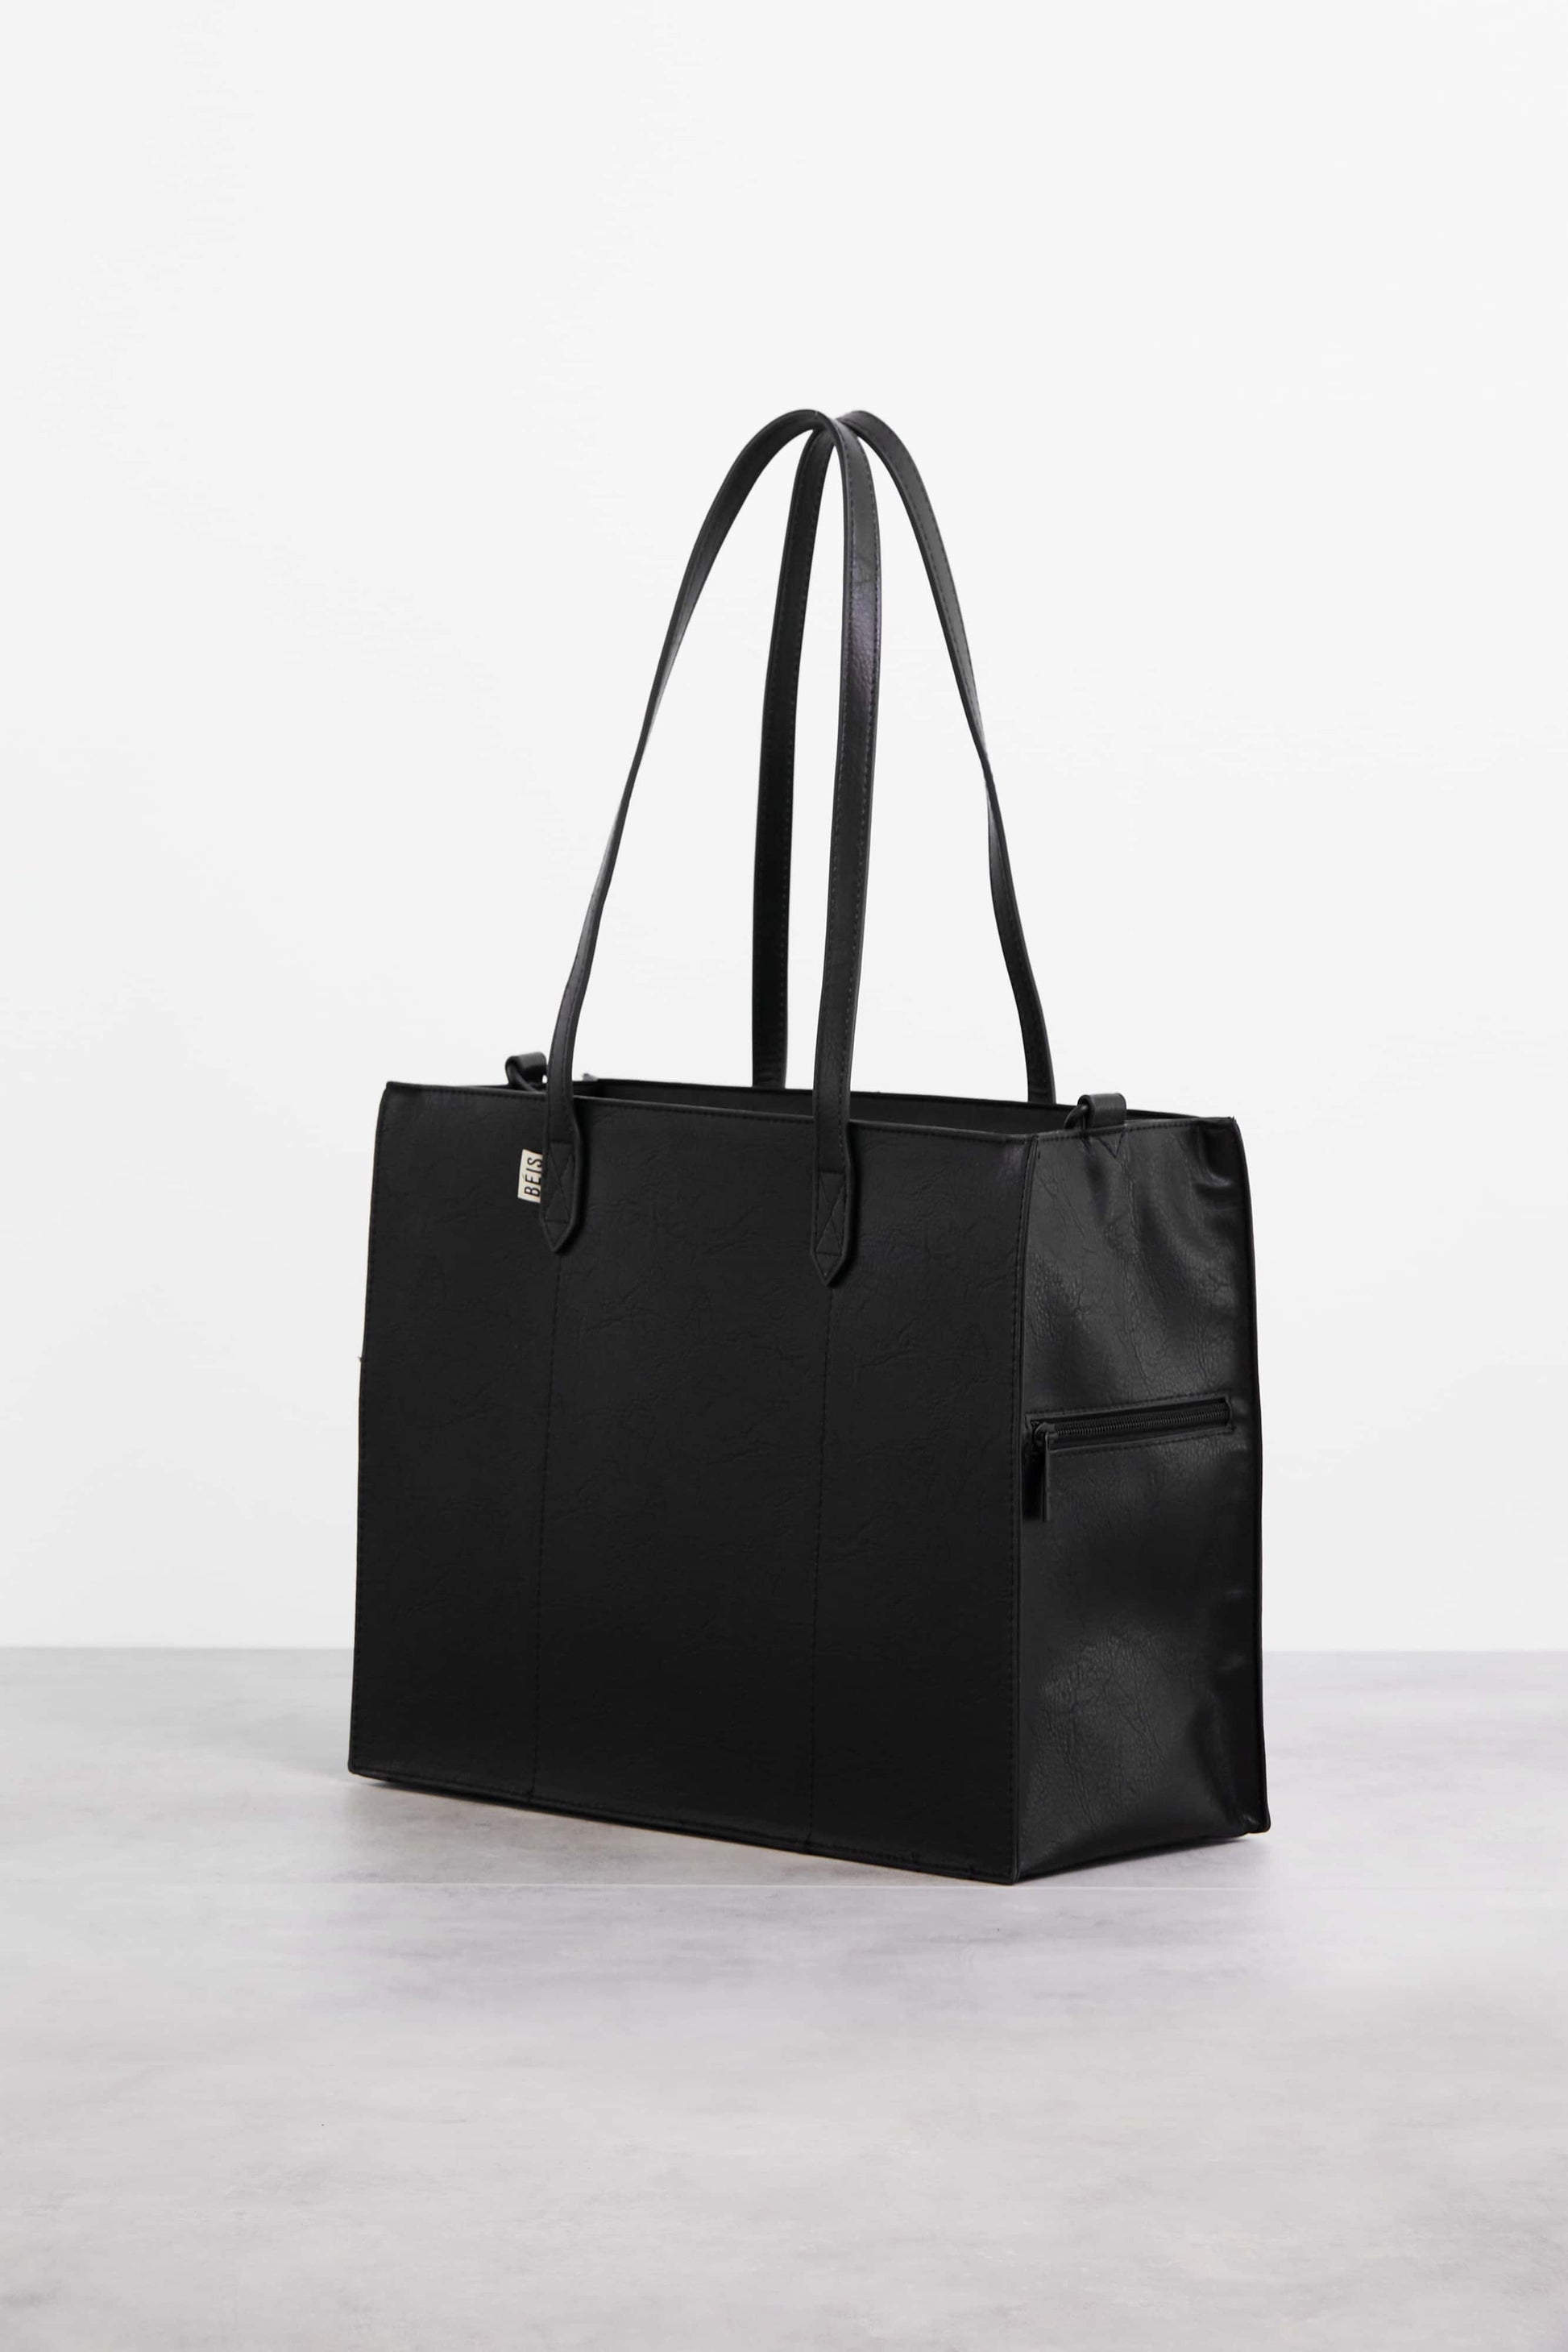 Black Leather Bag Black Leather Tote Bag Women Bags SALE 